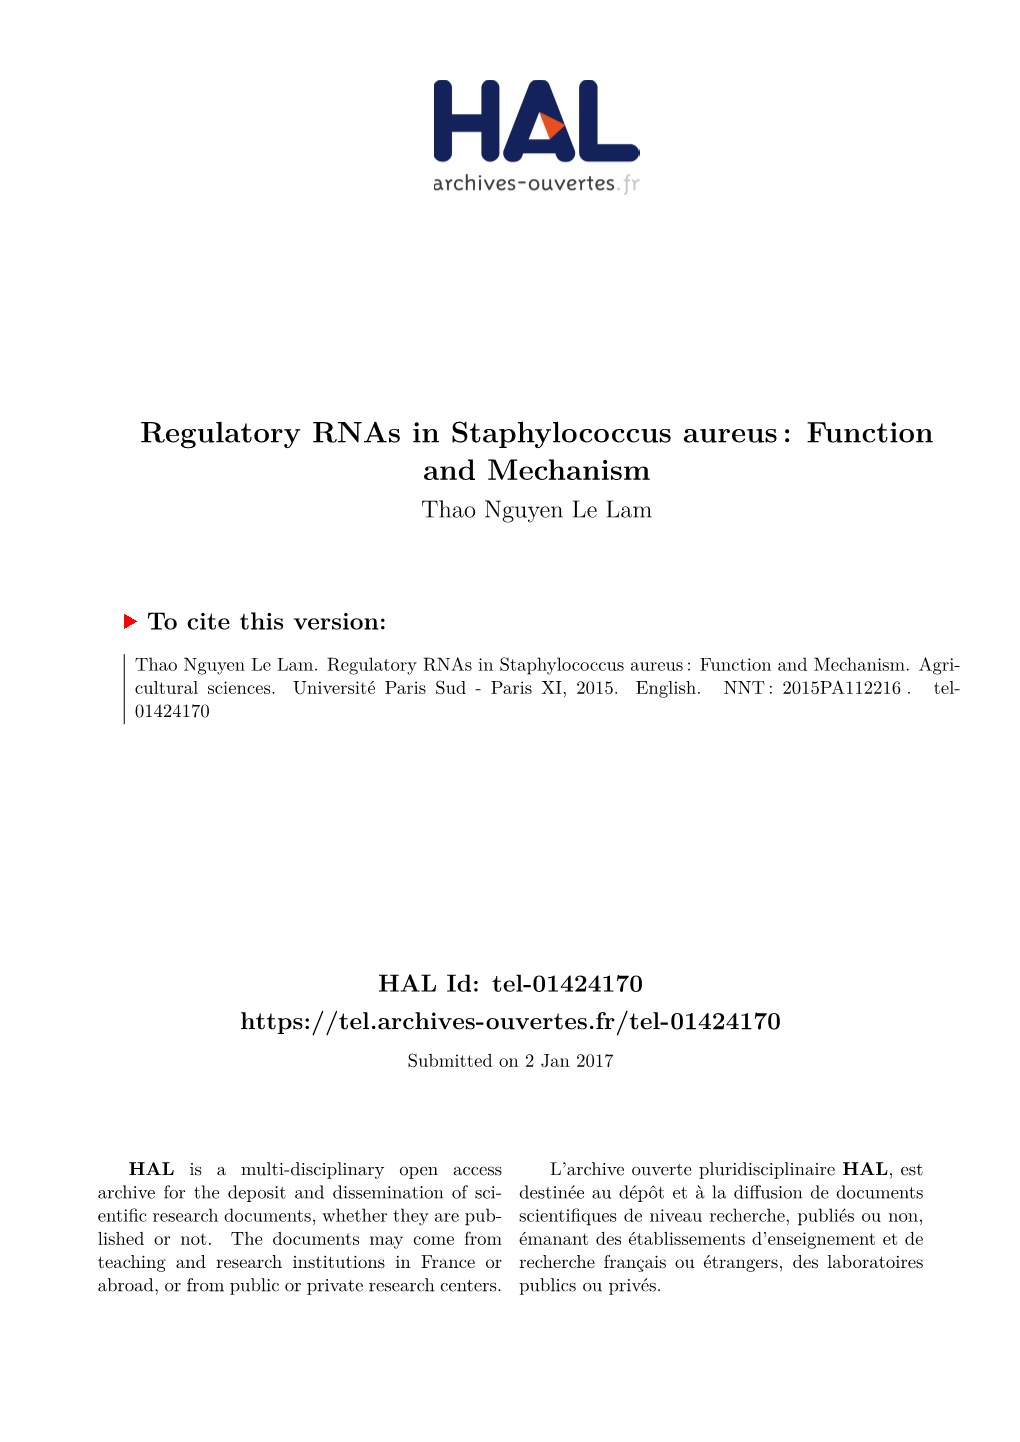 Regulatory Rnas in Staphylococcus Aureus: Function and Mechanism